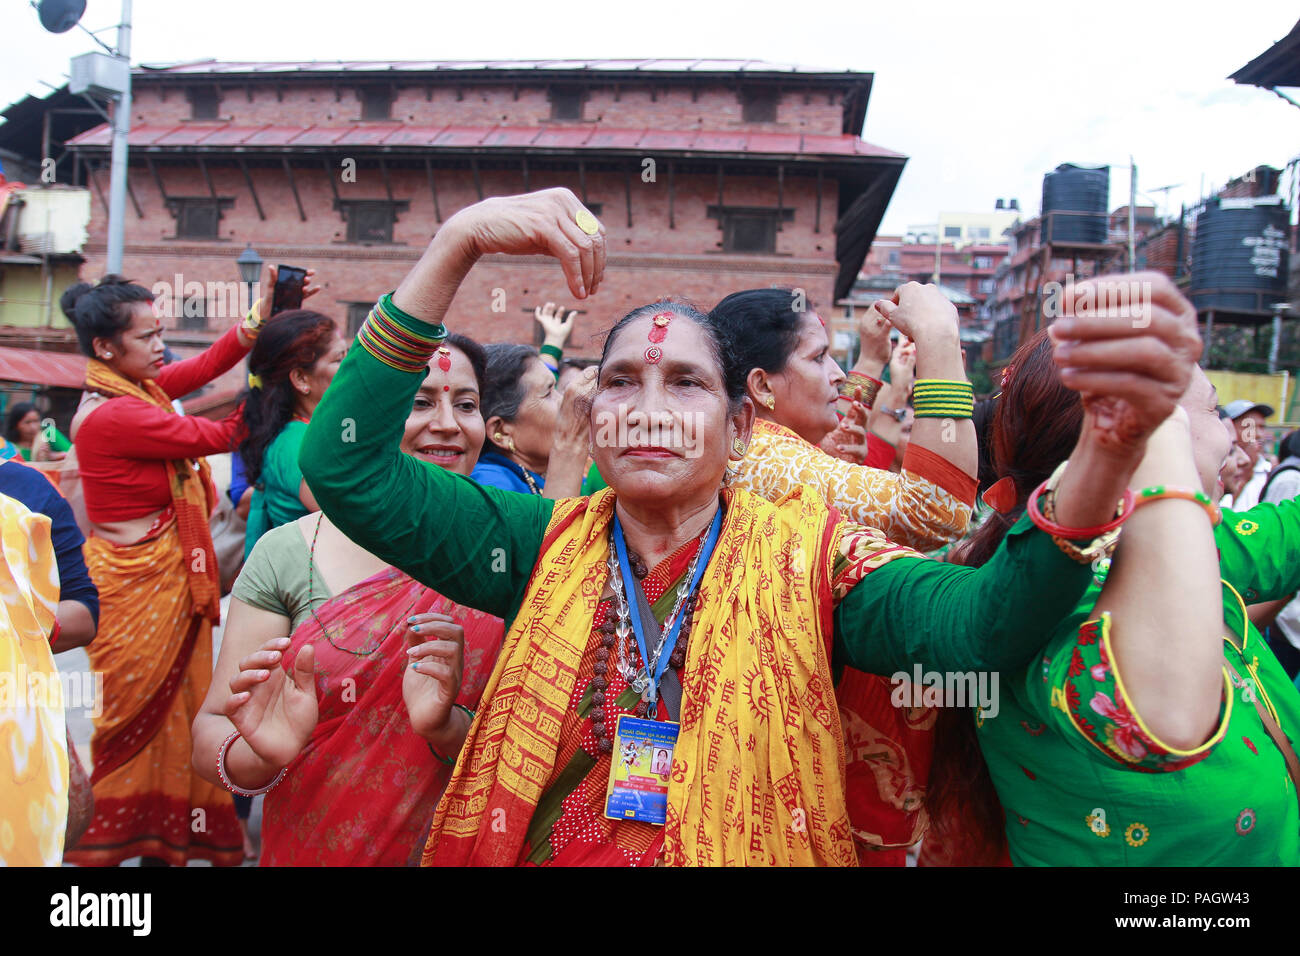 Tanzende Frauen während der Teej Festival hier in Kathmandu, Nepal. Sarita Khakda/Alamy leben Nachrichten Stockfoto